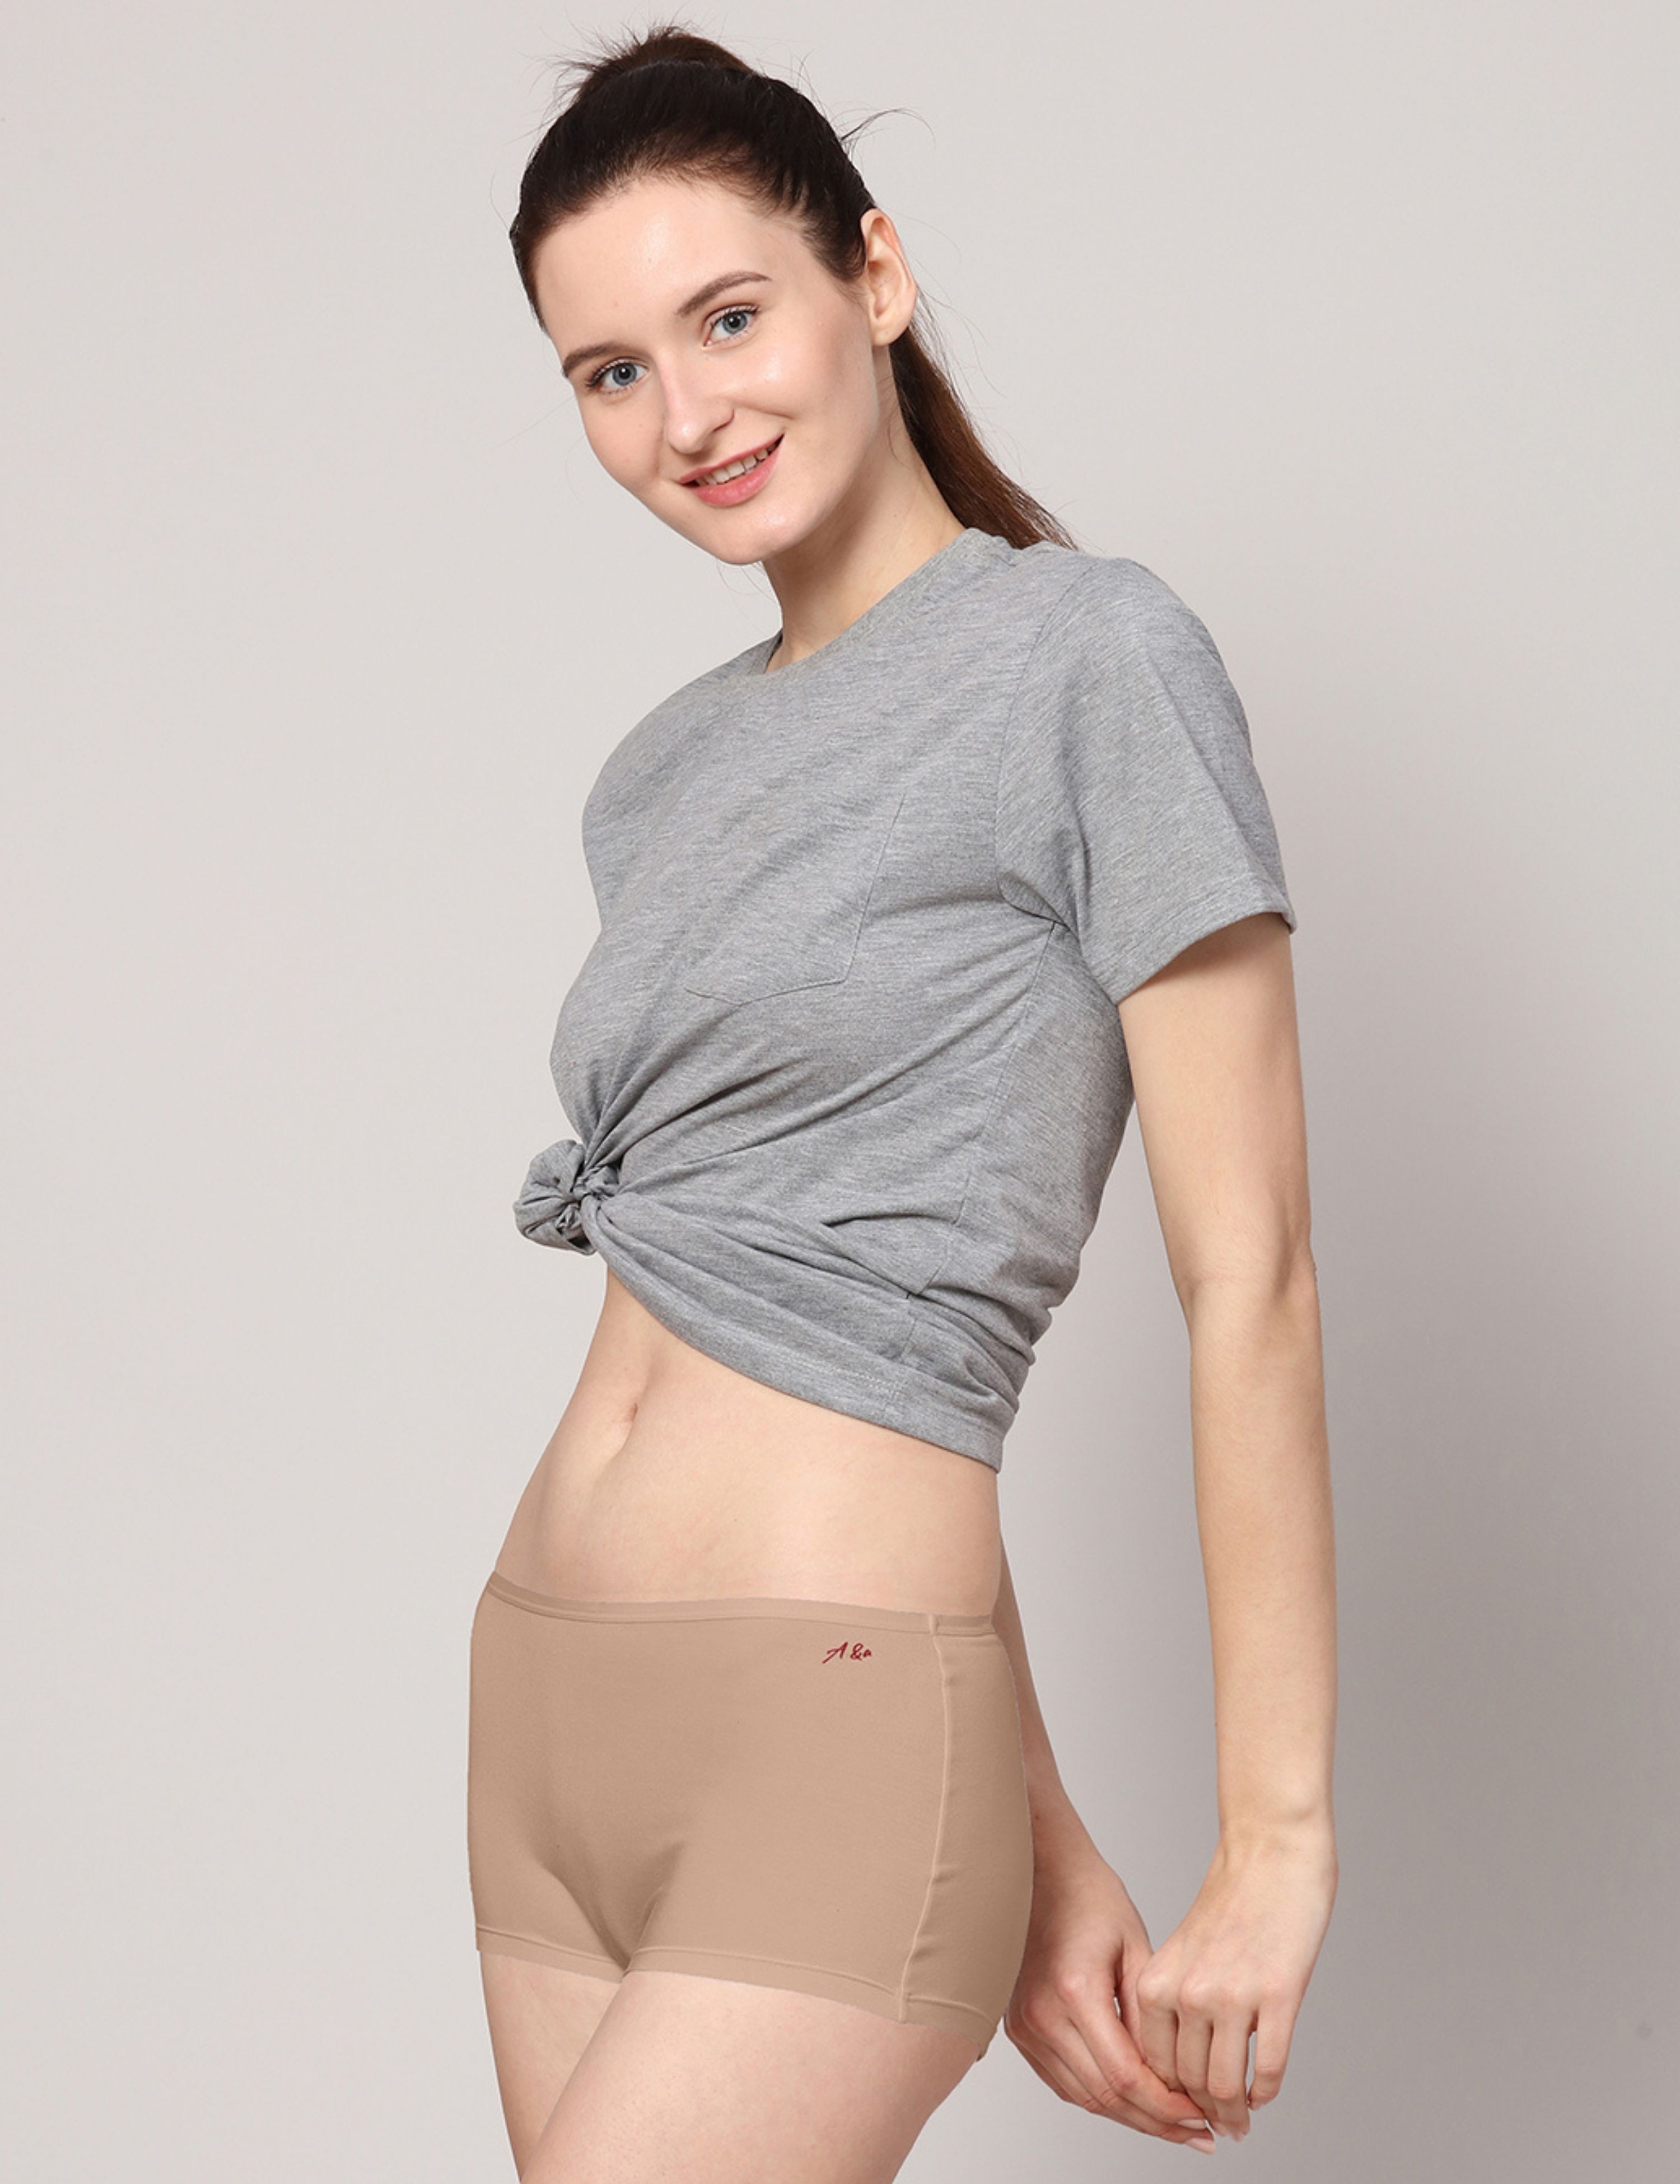 AshleyandAlvis Women's Panties Micro Modal, Anti Bacterial, Skinny